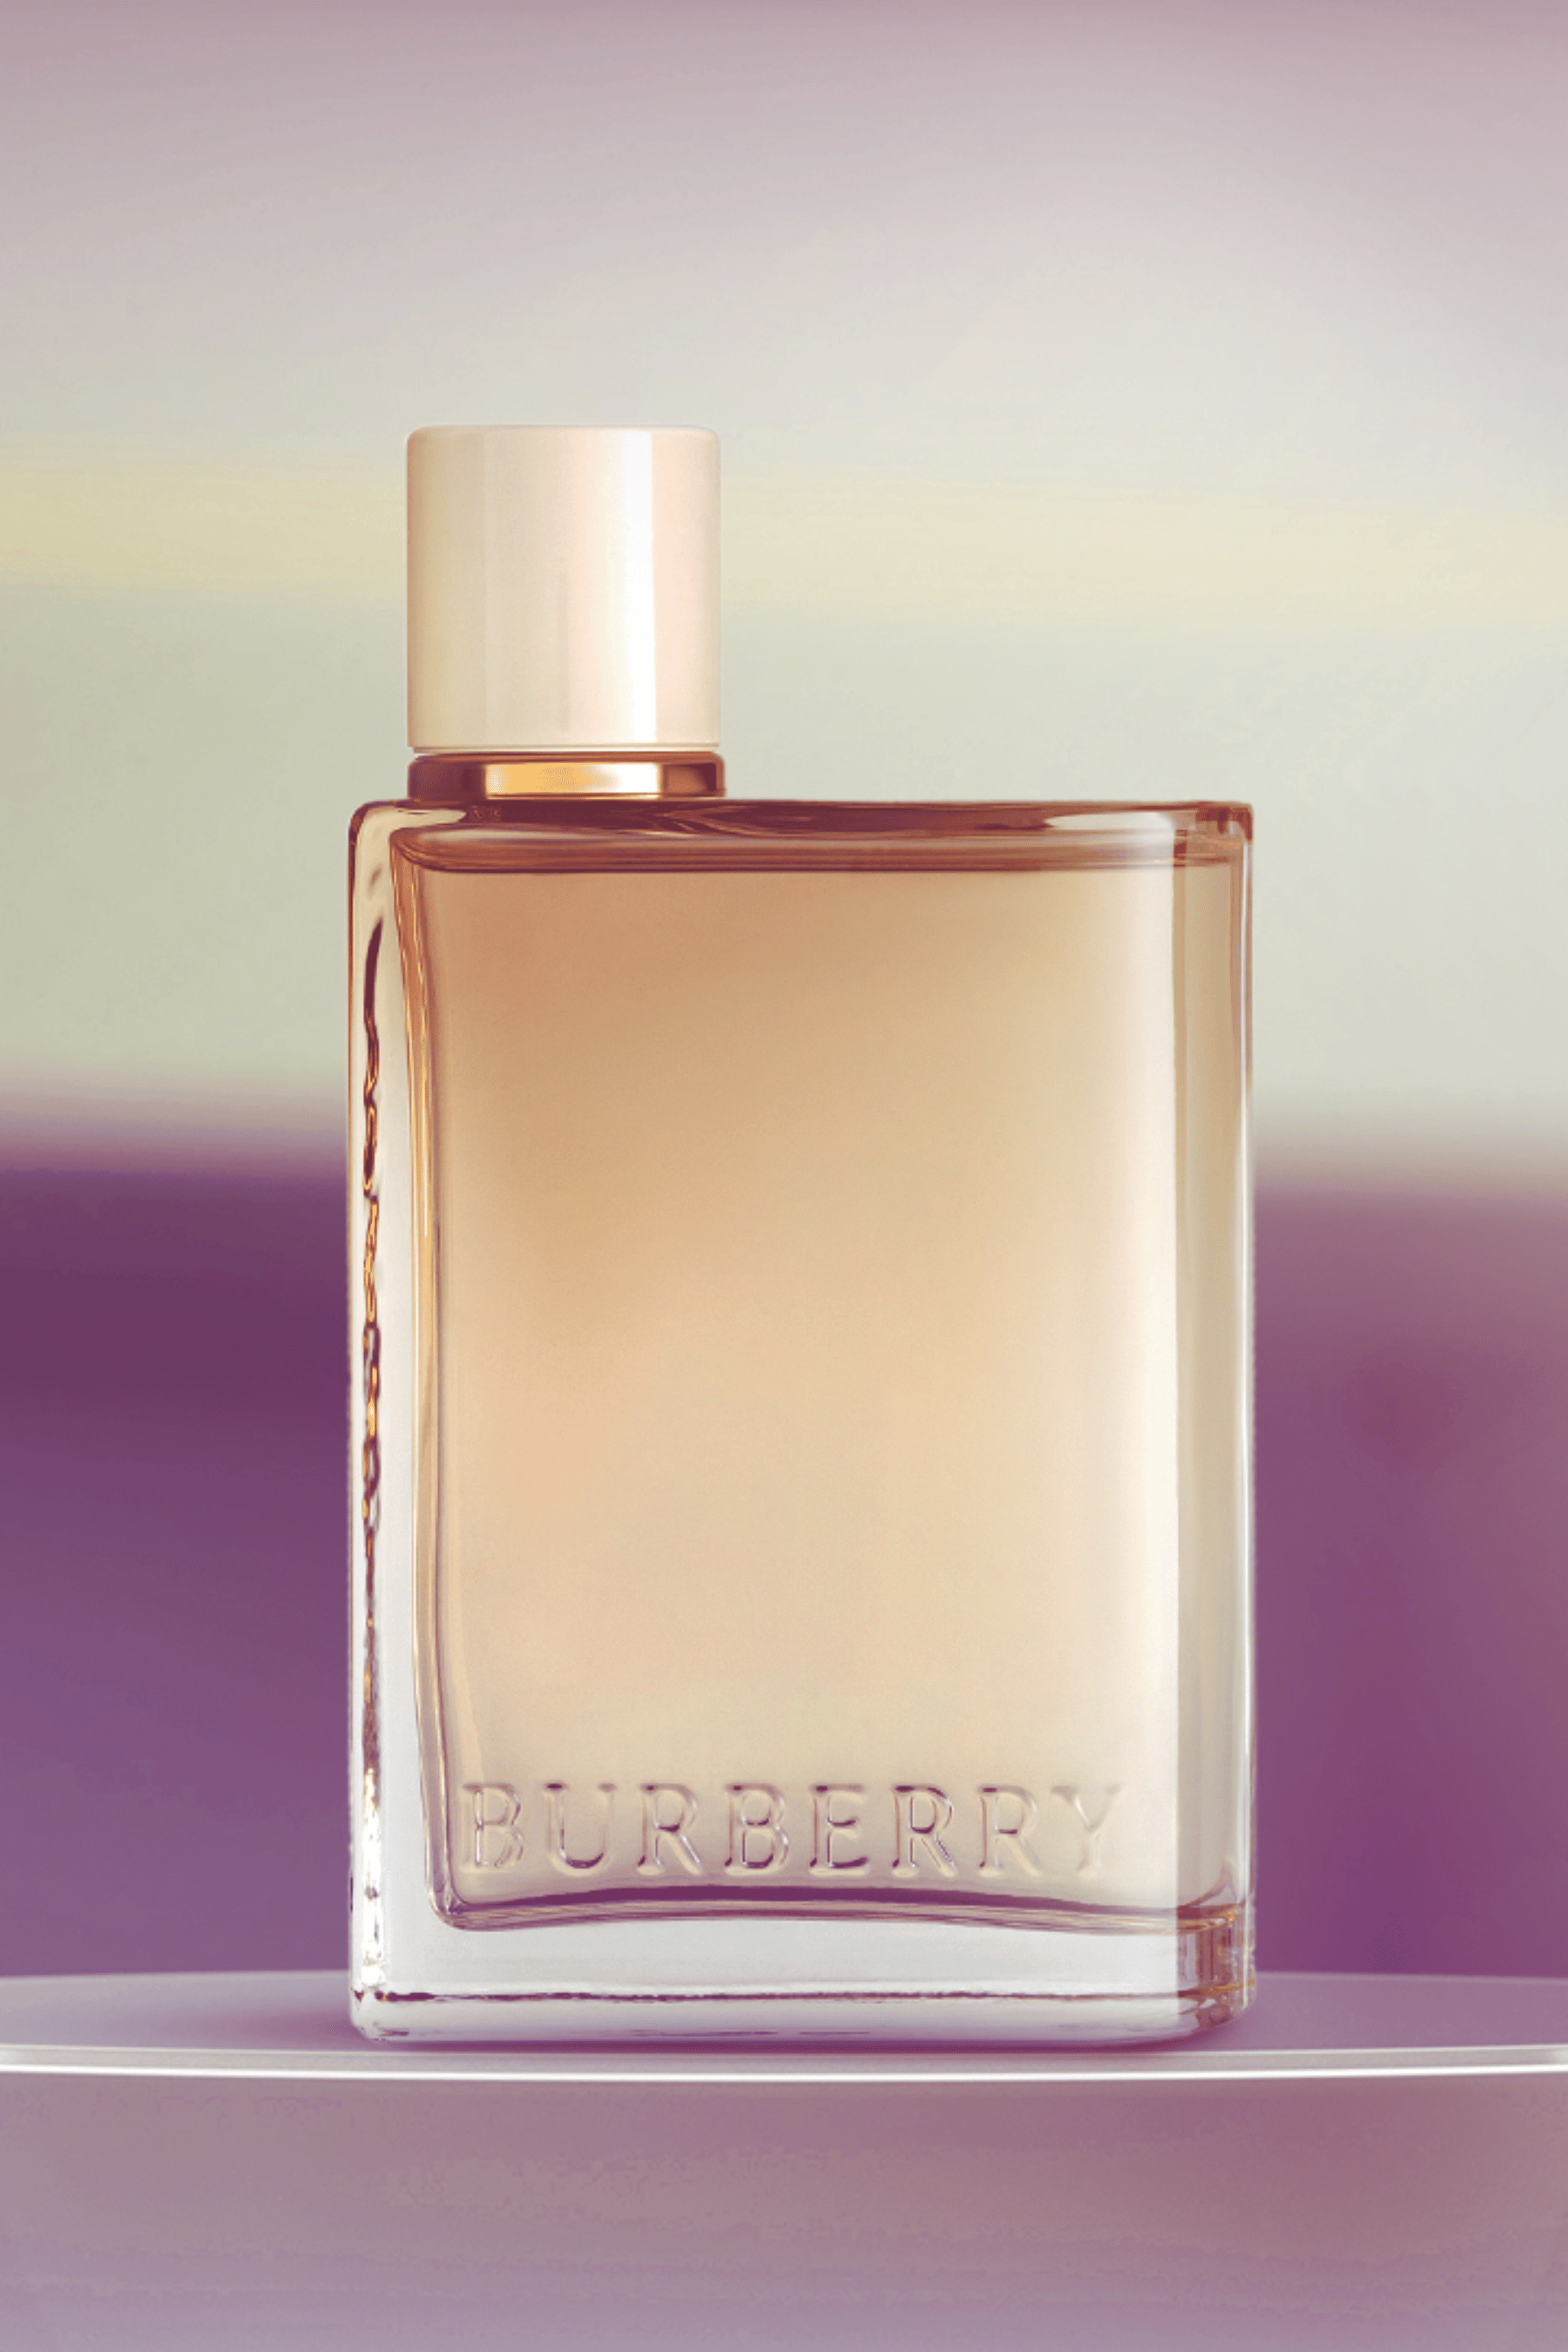 Burberry | Her London Dream Eau de Parfum - REBL